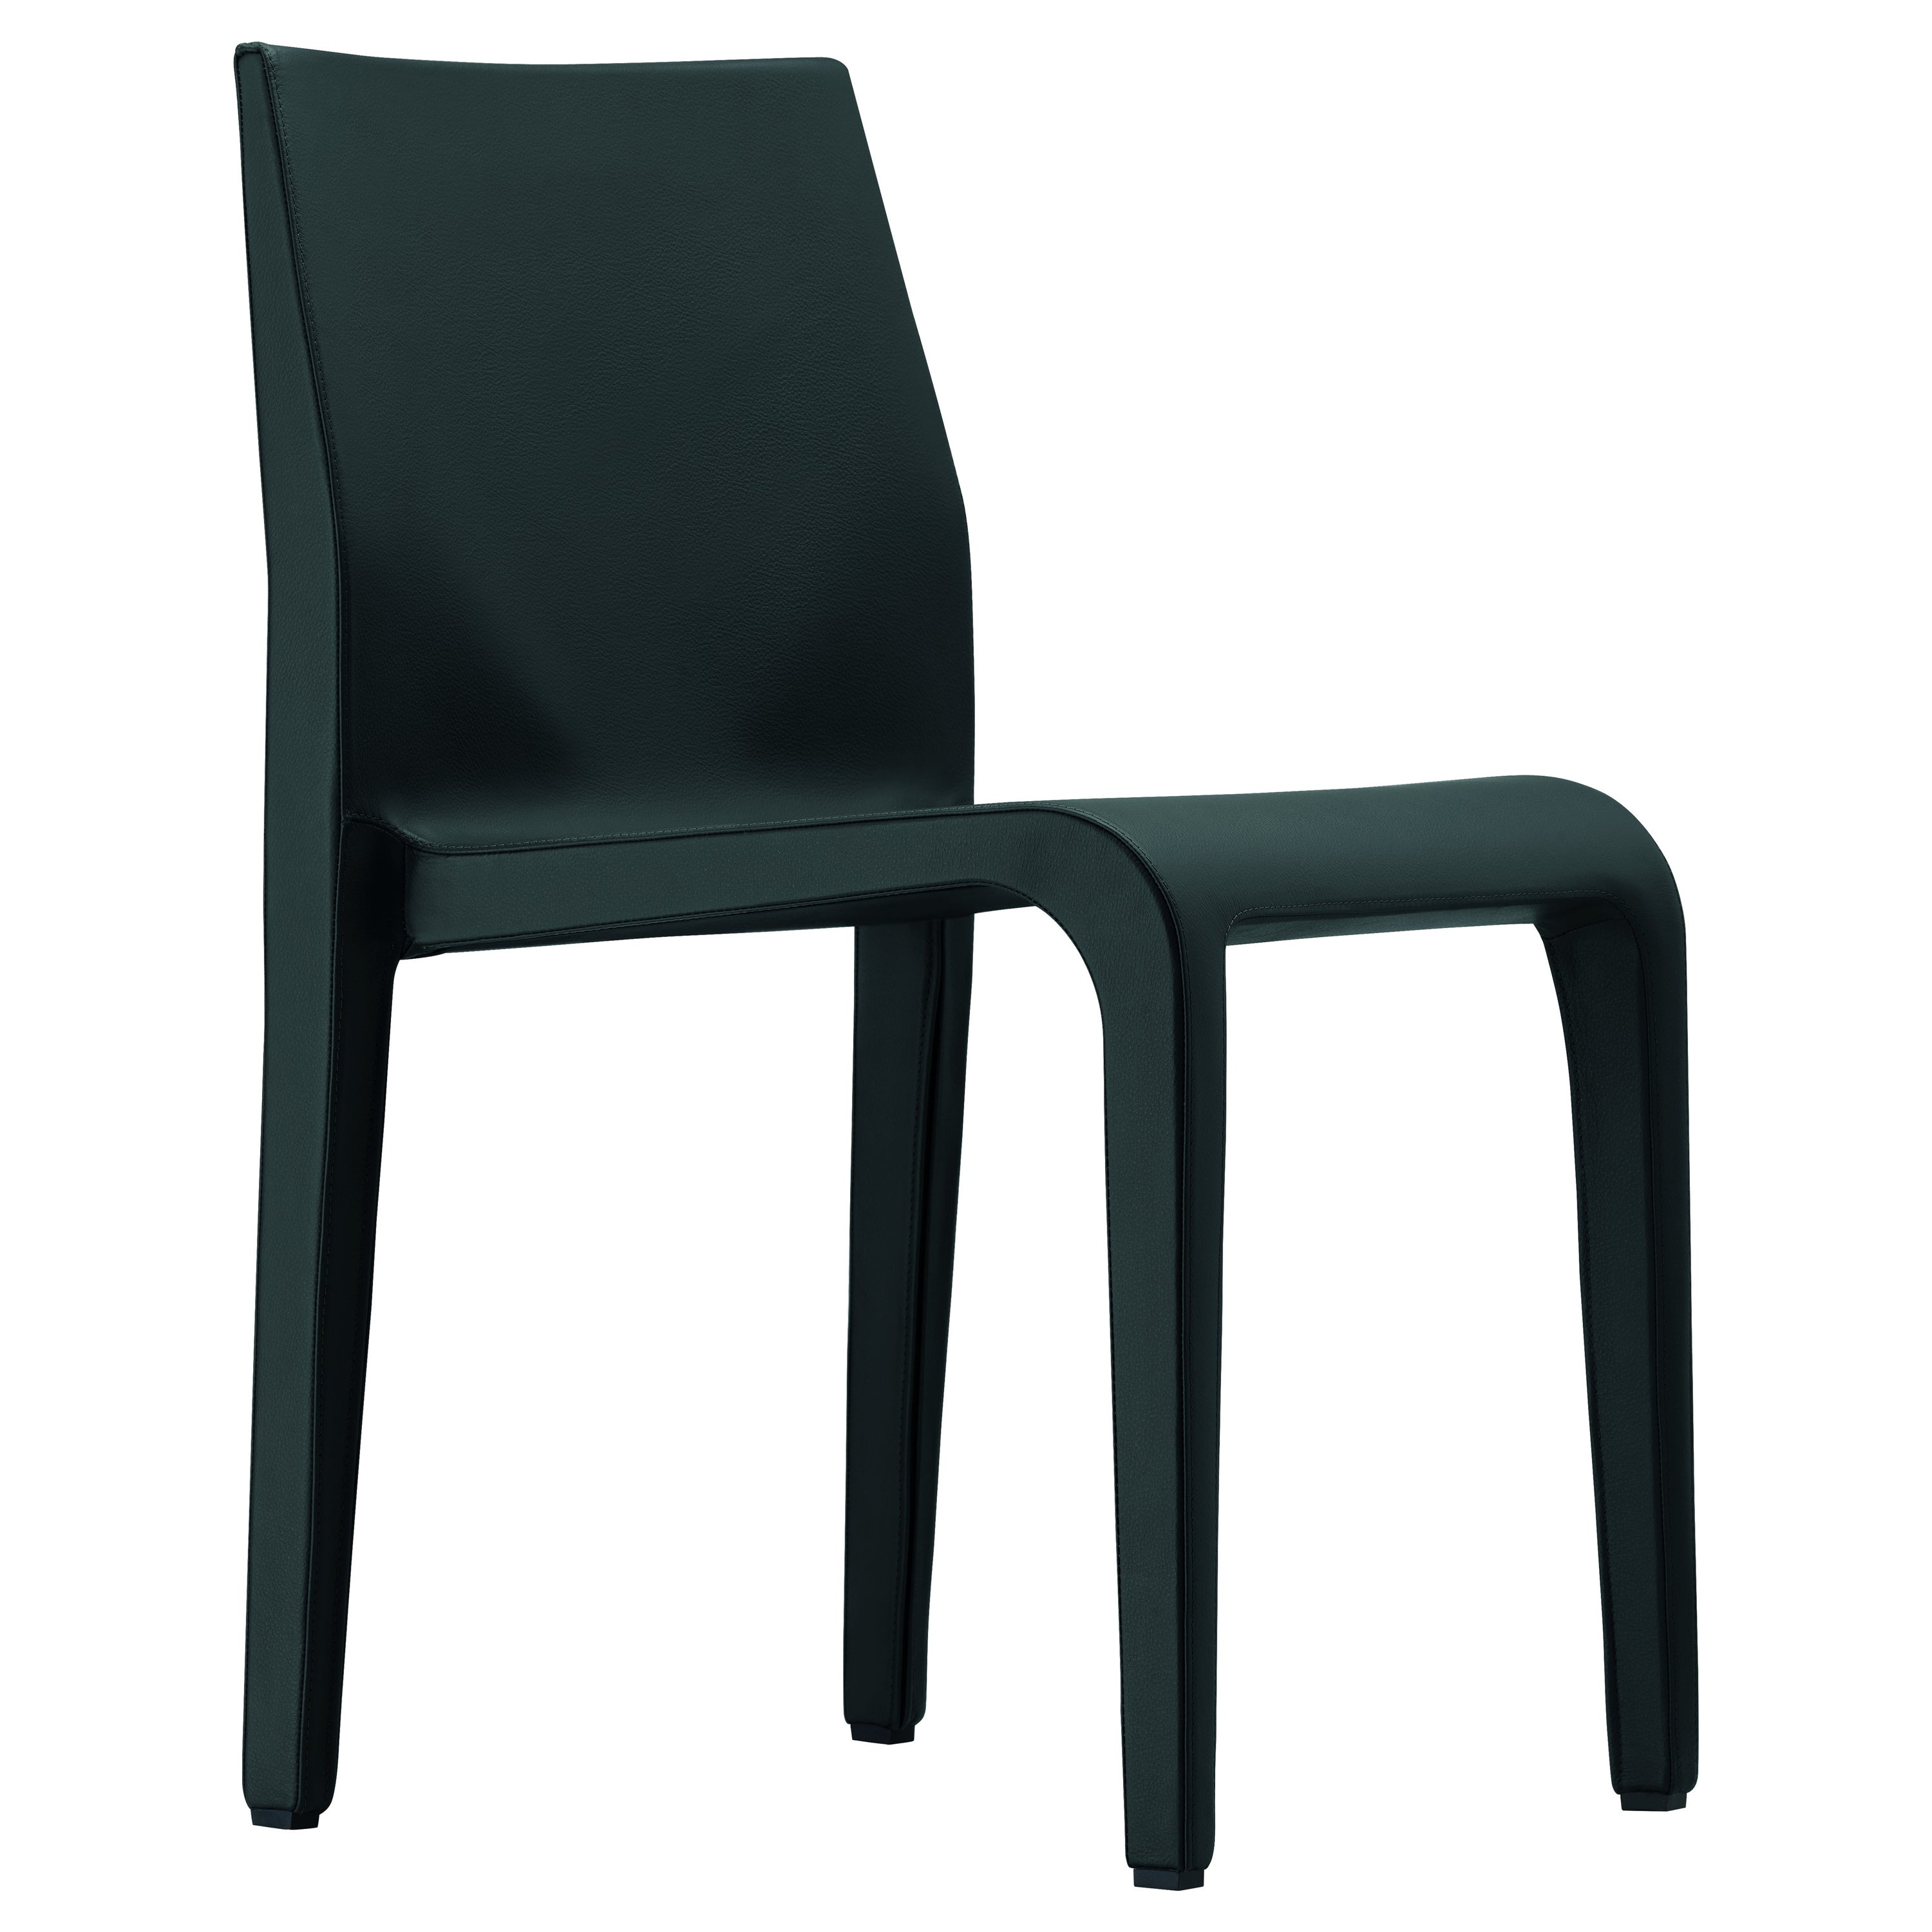 Alias 301 Laleggera Stuhl aus schwarzem Vollschwarzem Leder von Riccardo Blumer